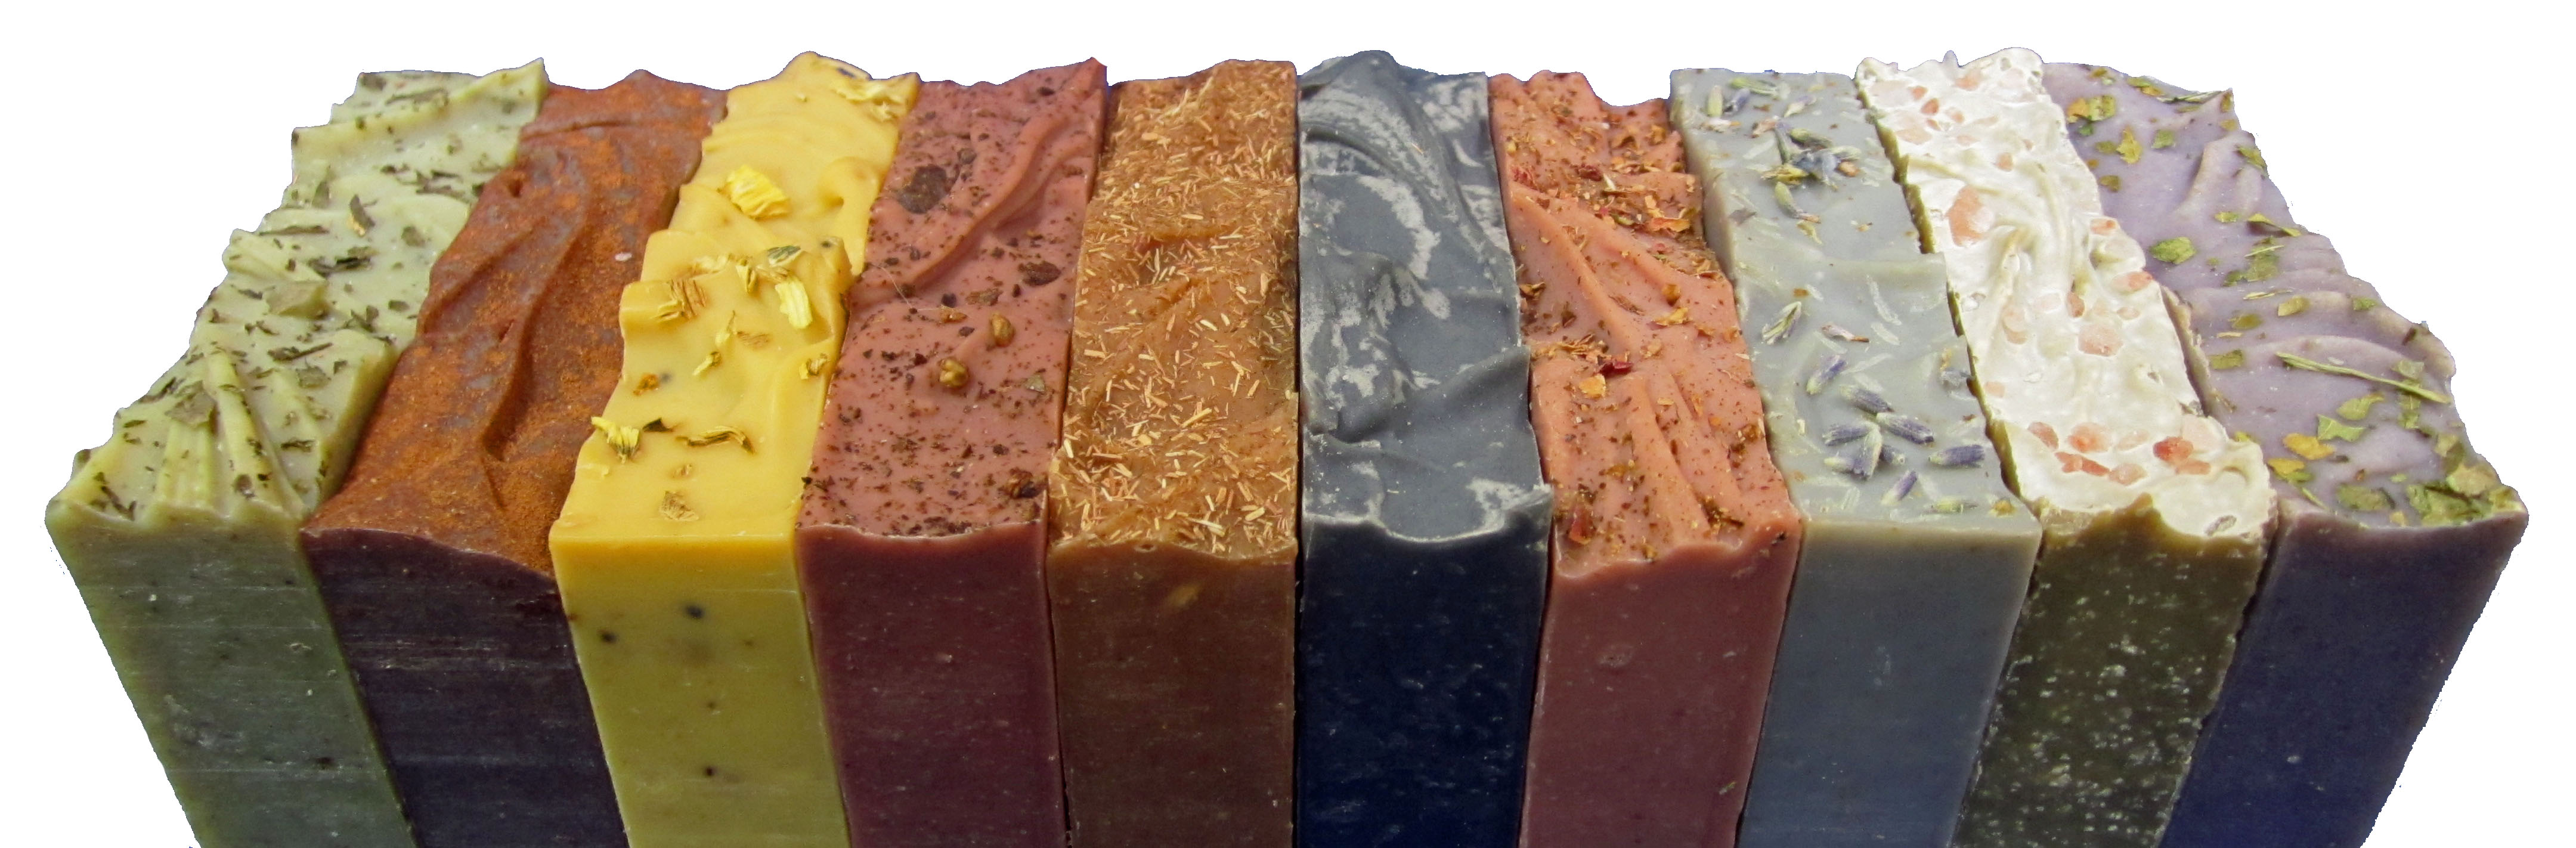 10 colorful handmade organic natural soaps